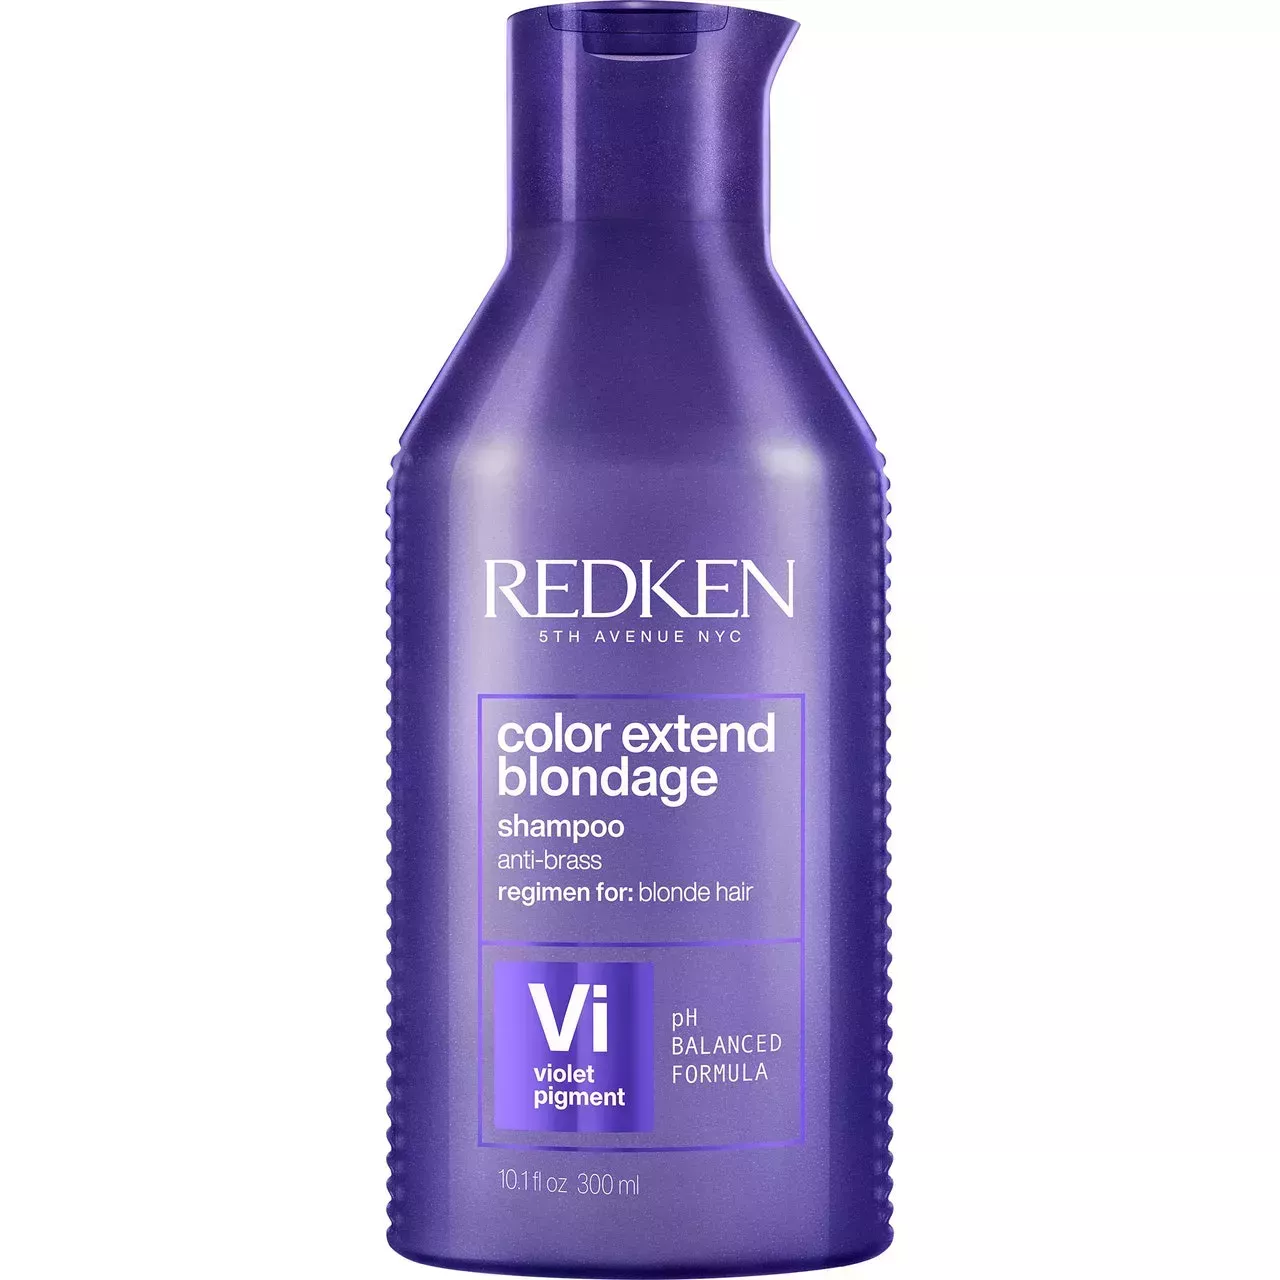 Redken Color Extend Blondage Shampoo on white background